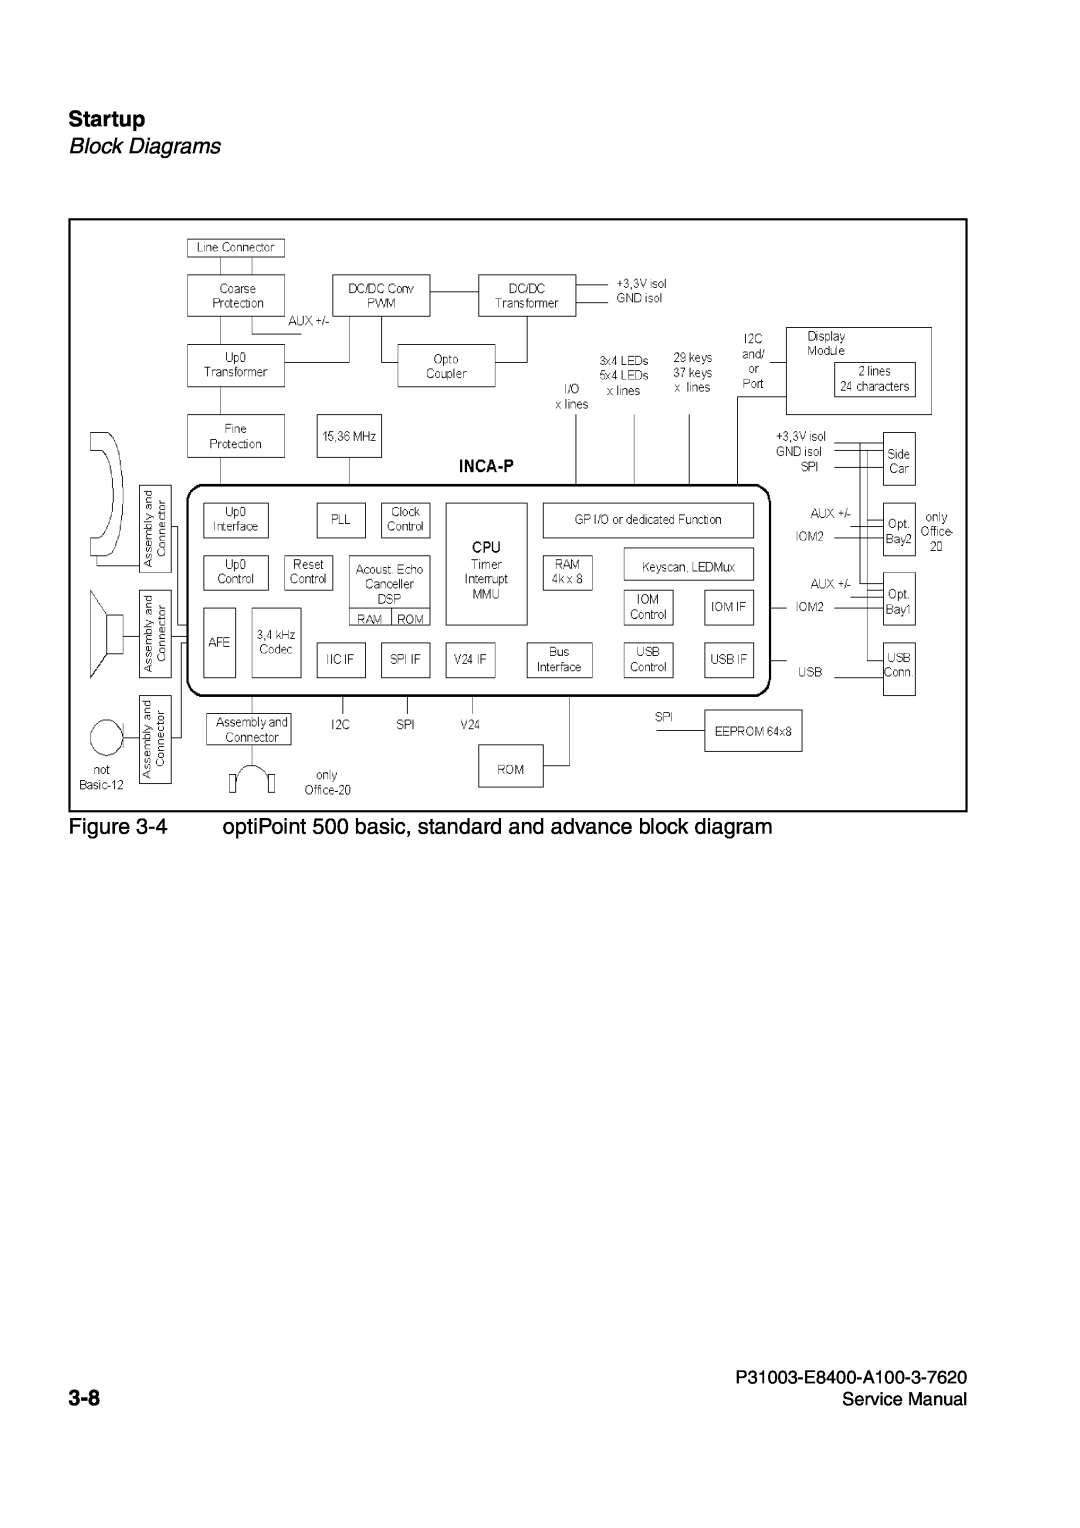 Siemens service manual Startup, 4 optiPoint 500 basic, standard and advance block diagram 